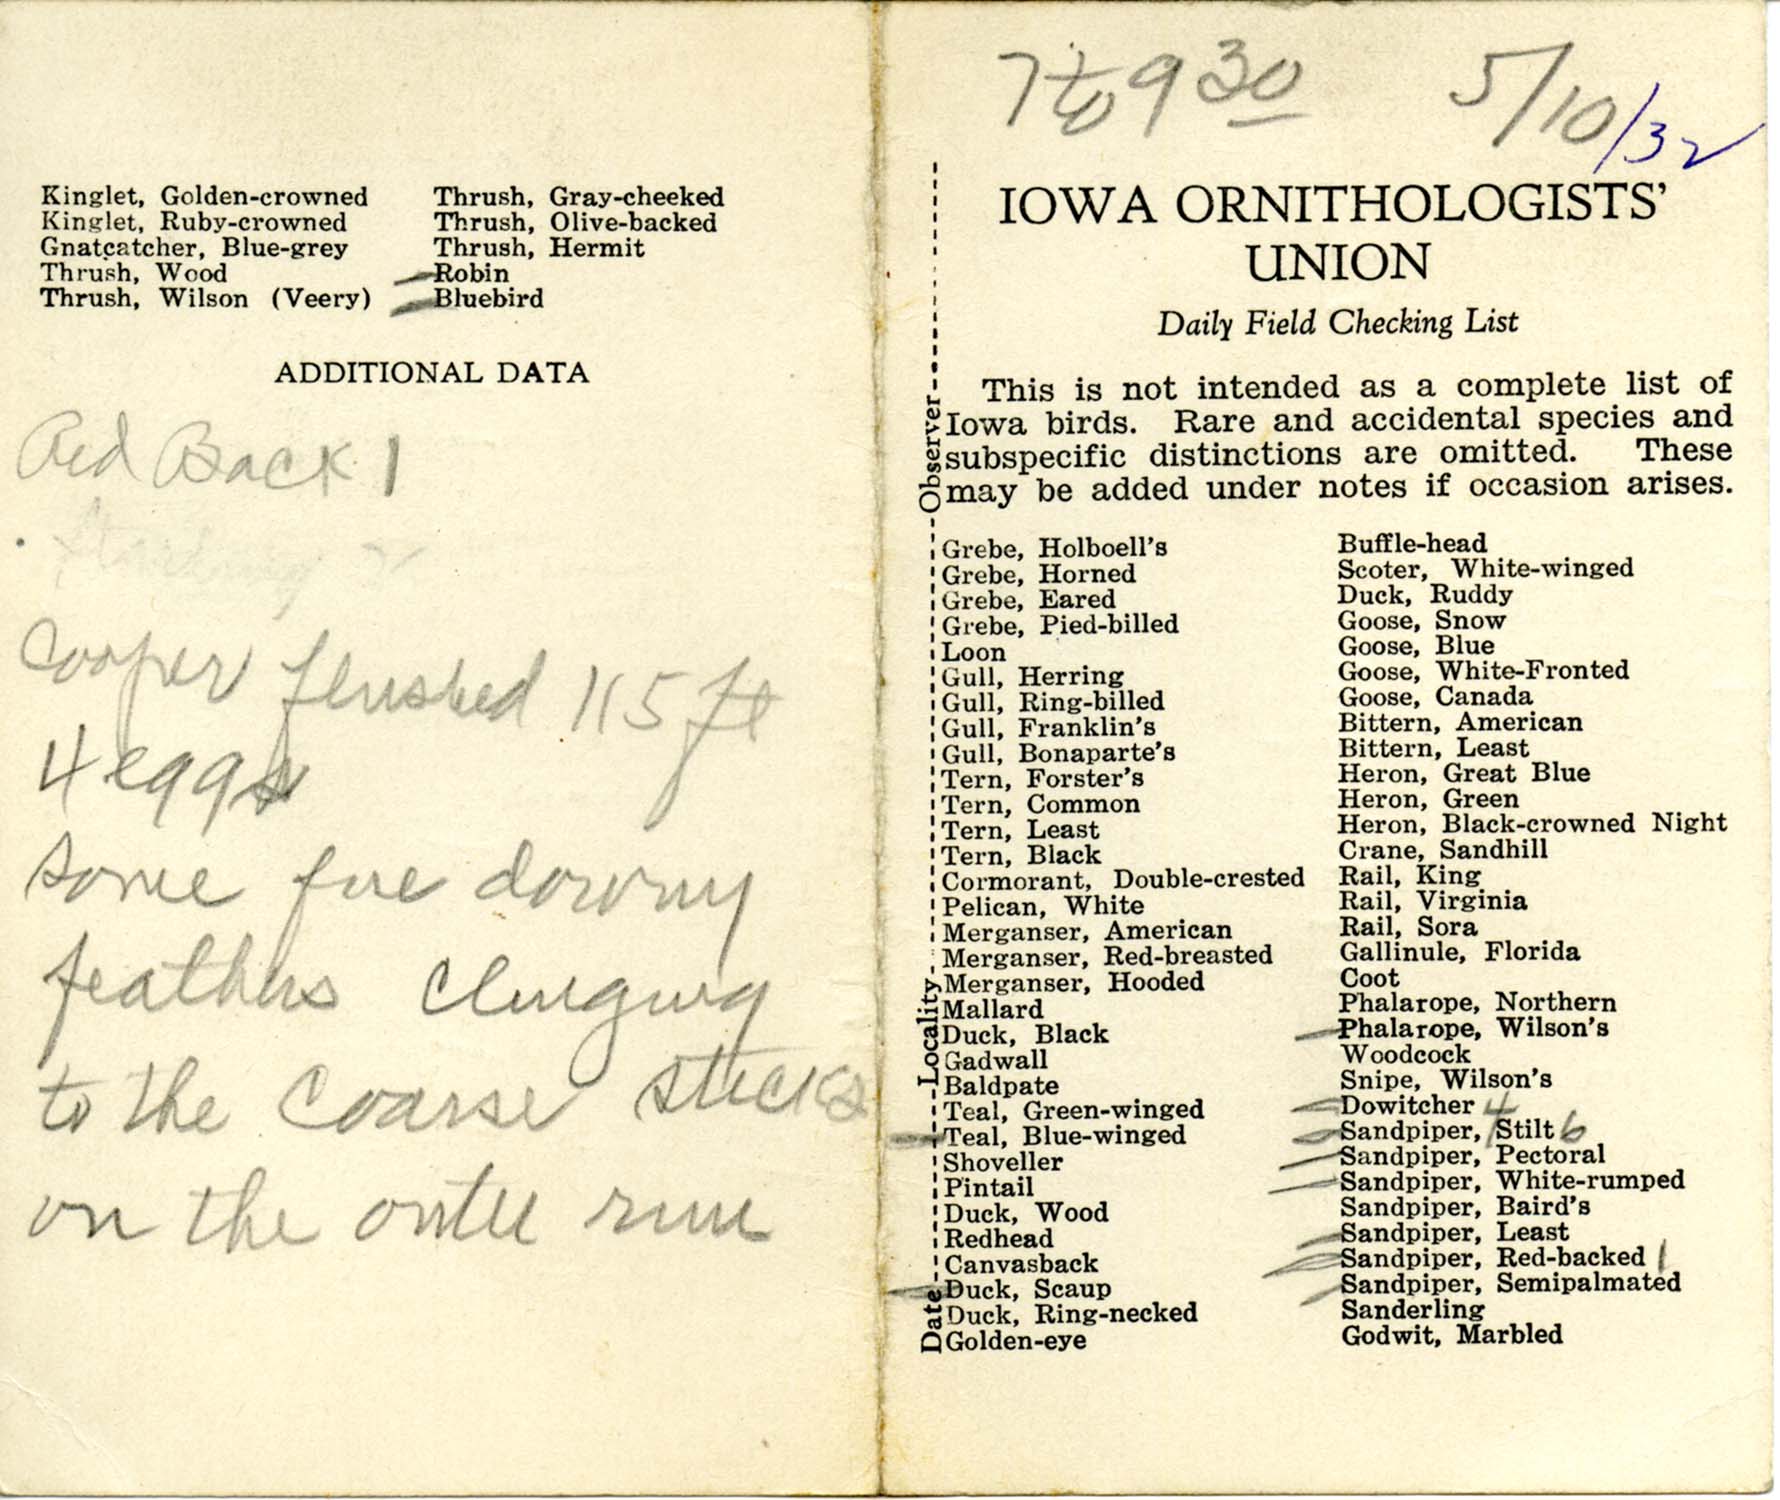 Daily field checking list, Walter Rosene, May 10, 1932